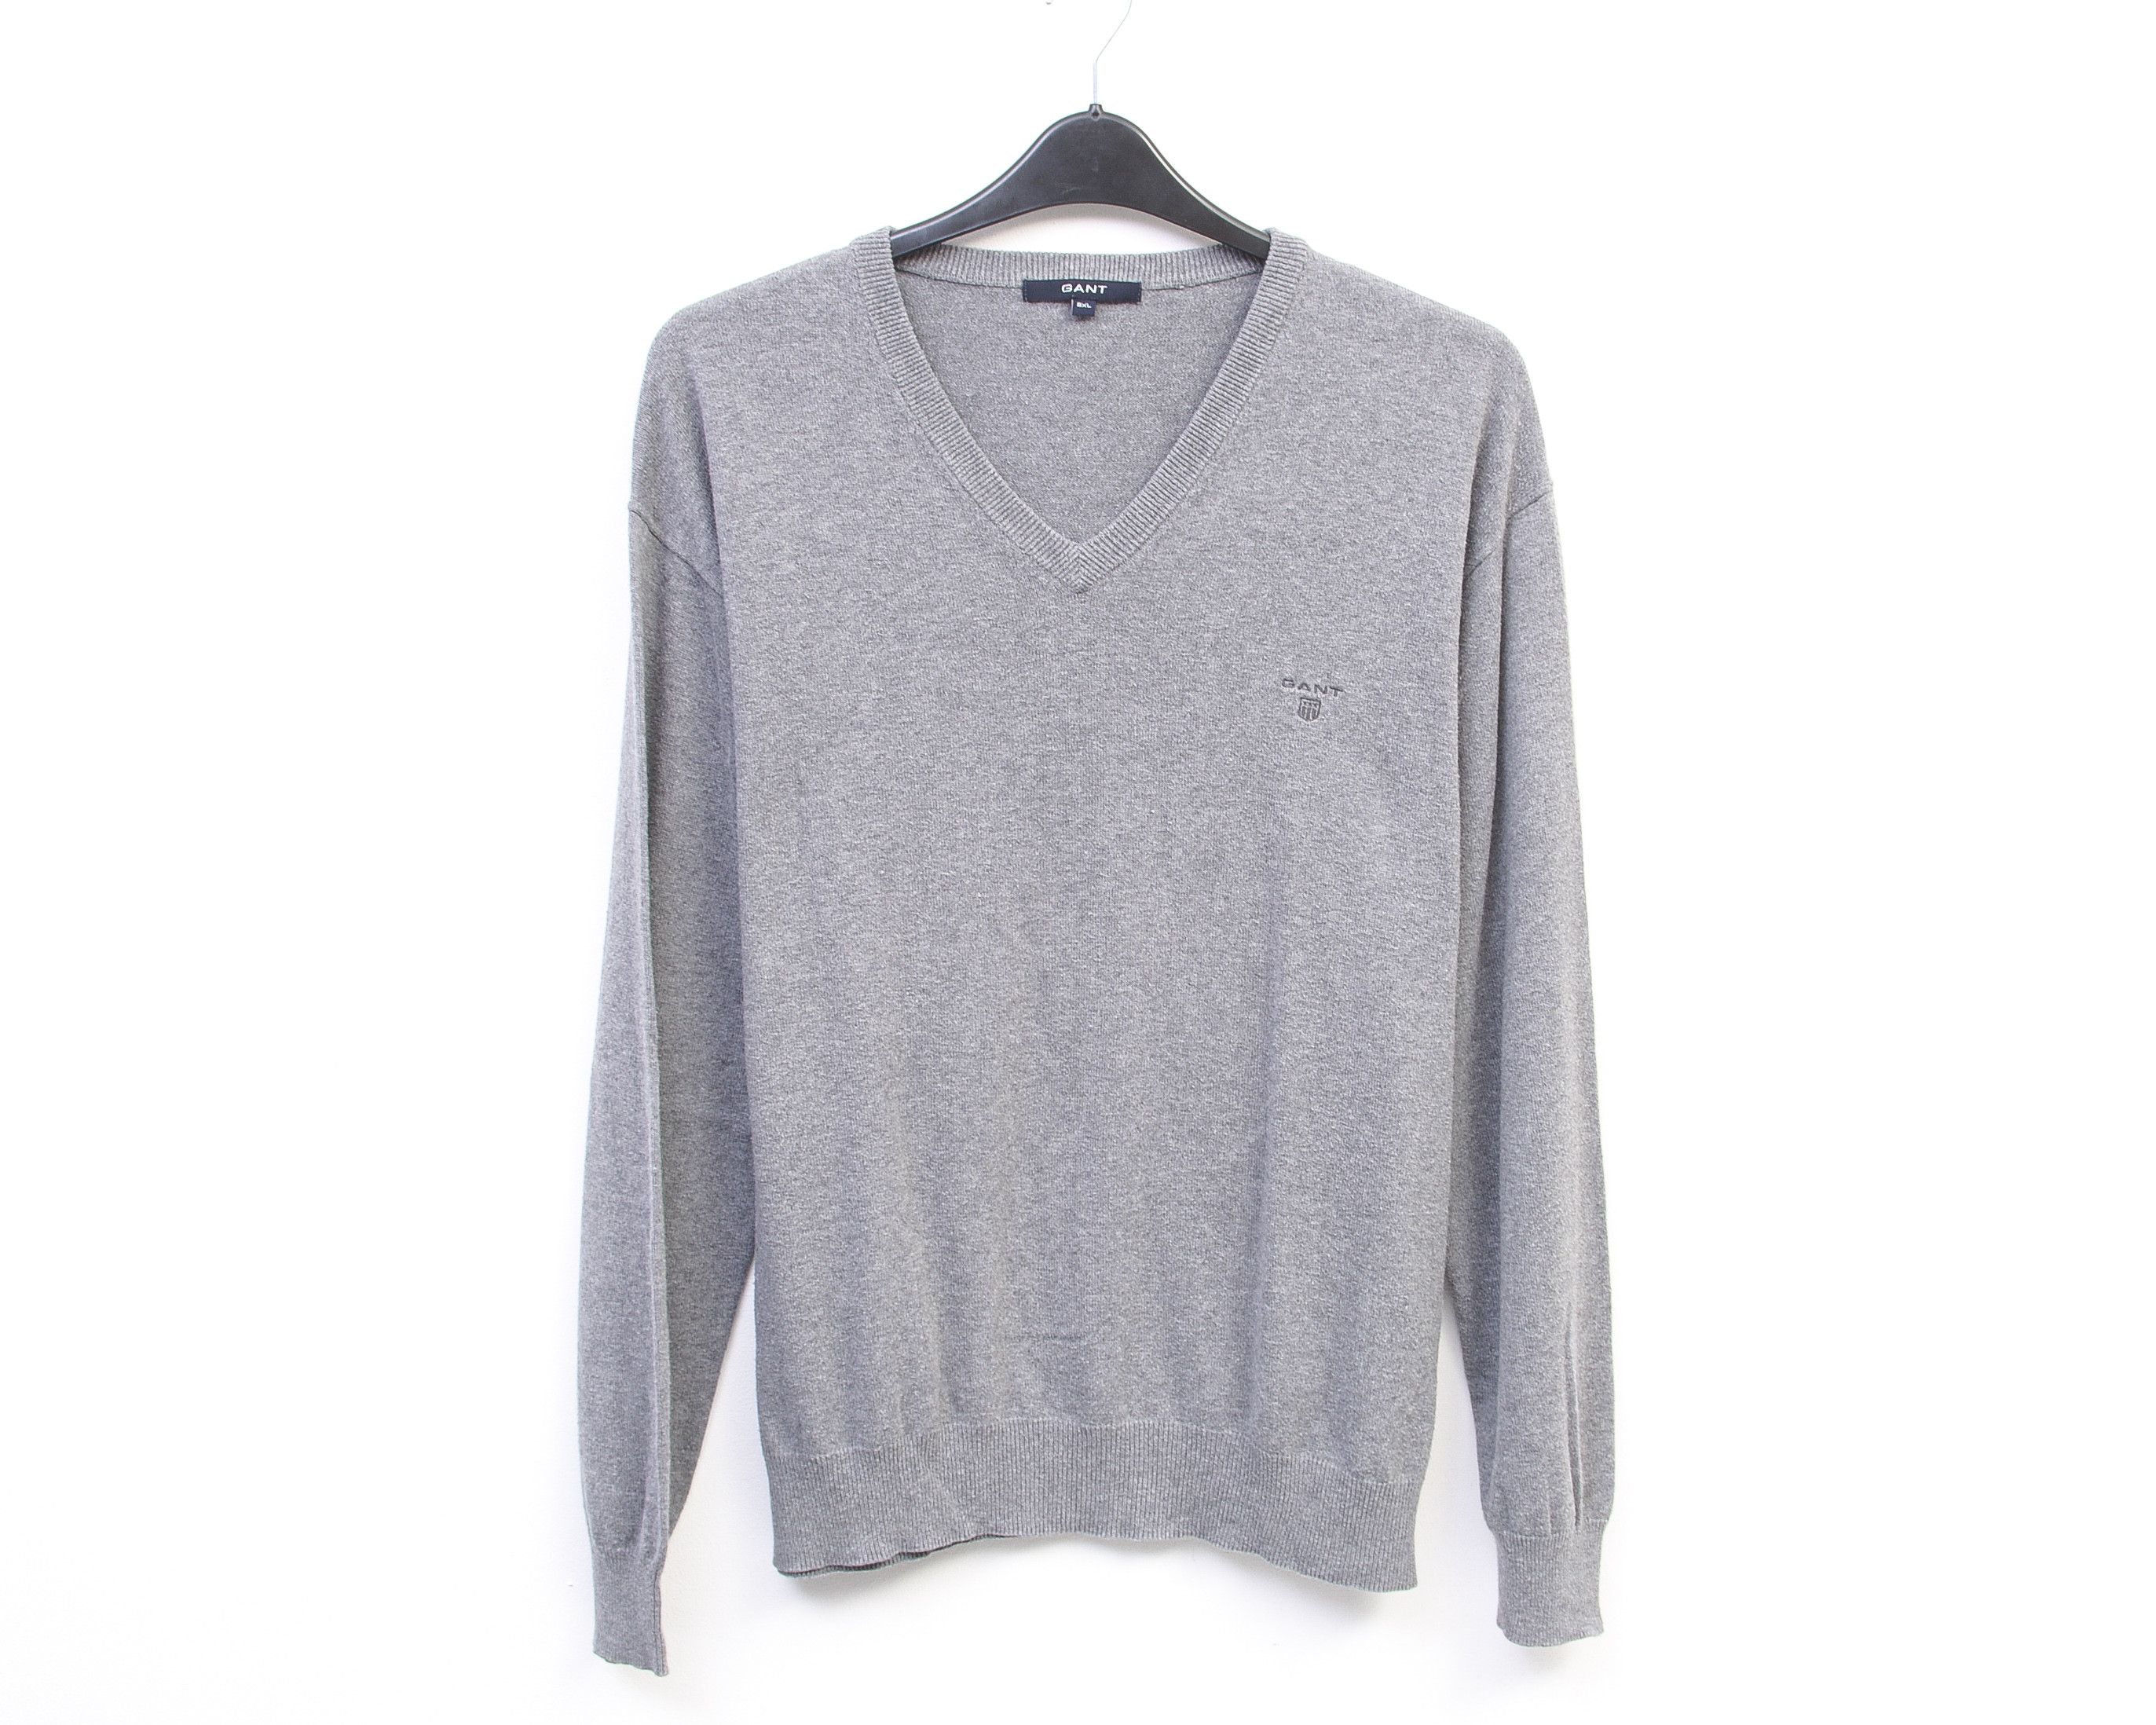 Gant Sweatshirt Pullover V-Neck Jumper Cotton Grey Top Sweater | Grailed